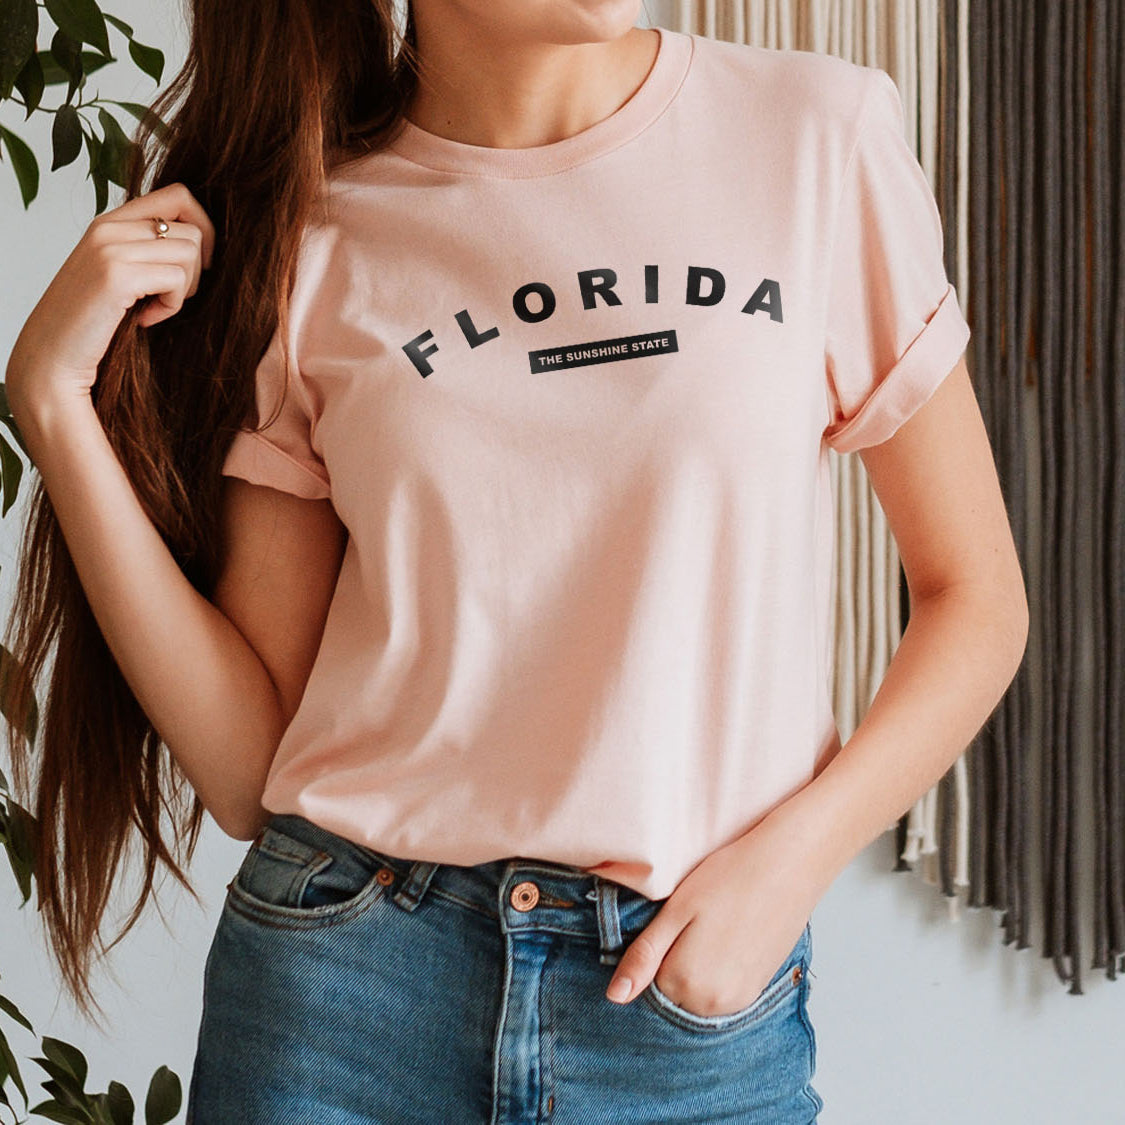 Florida The Sunshine State T-shirt - United States Name & Slogan Minimal Design Printed Tee Shirt